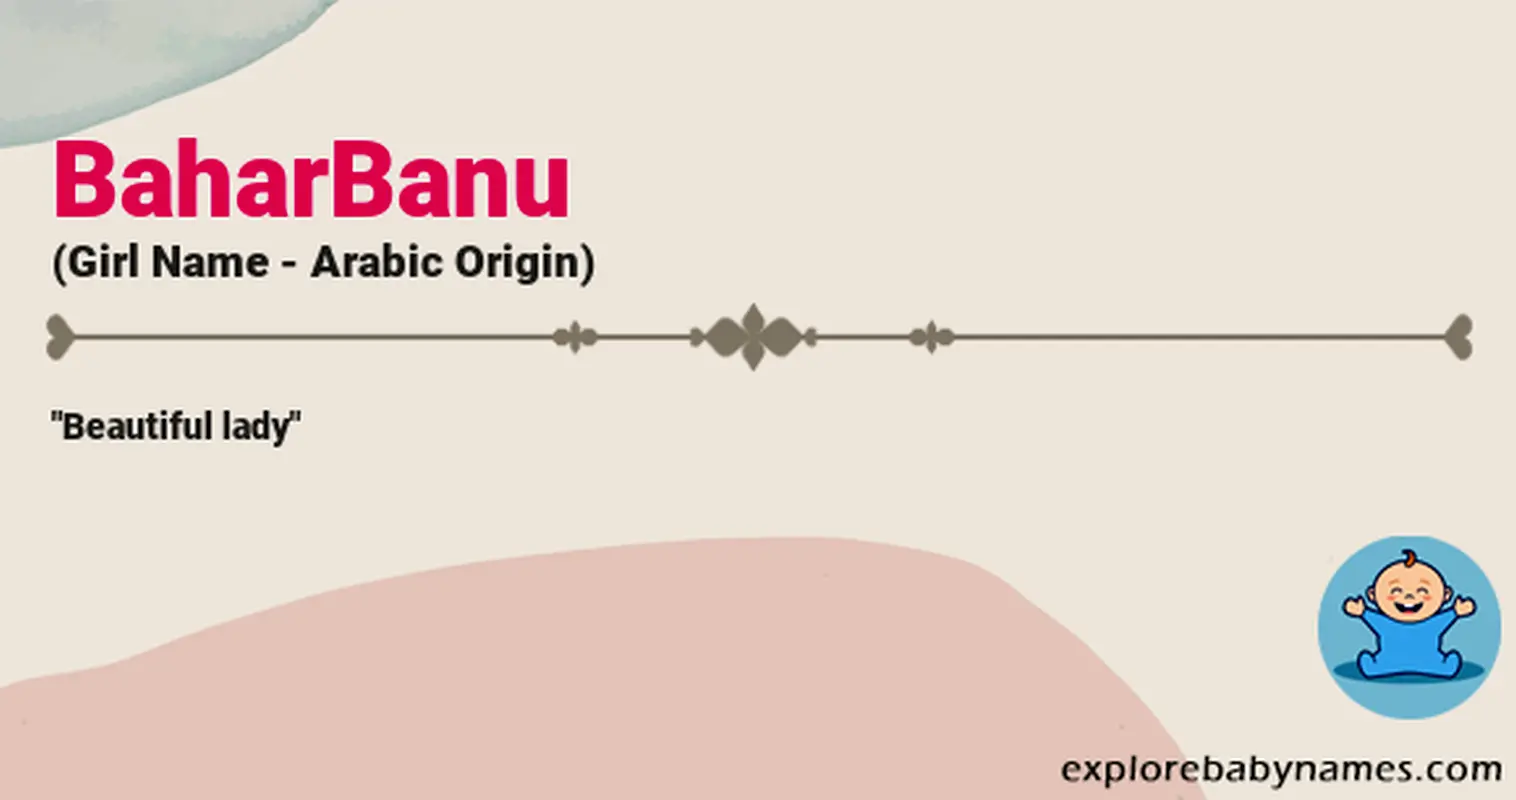 Meaning of BaharBanu